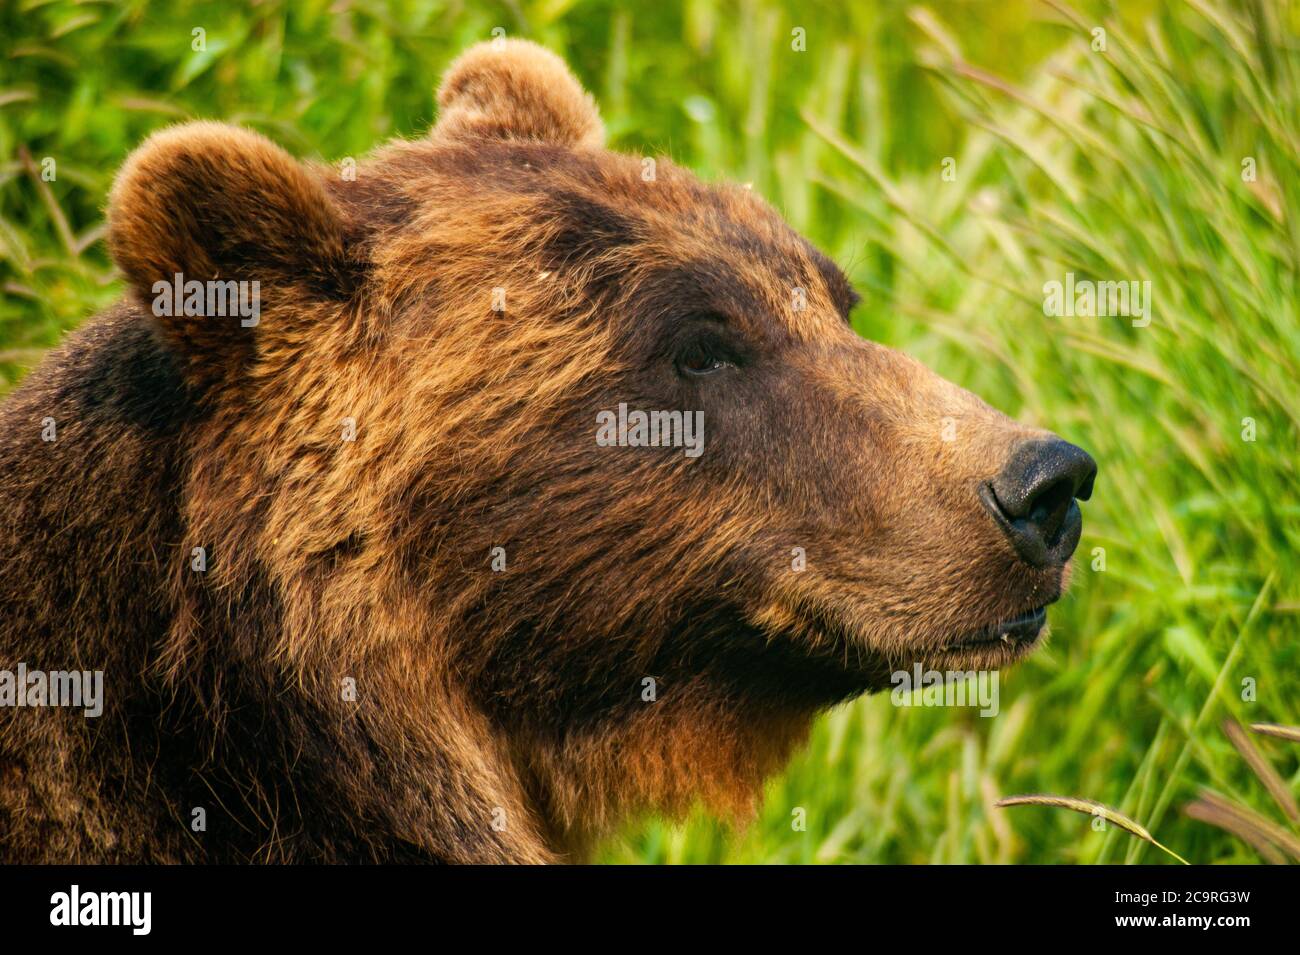 Braunbär beim Beobachten im Gras Stockfoto